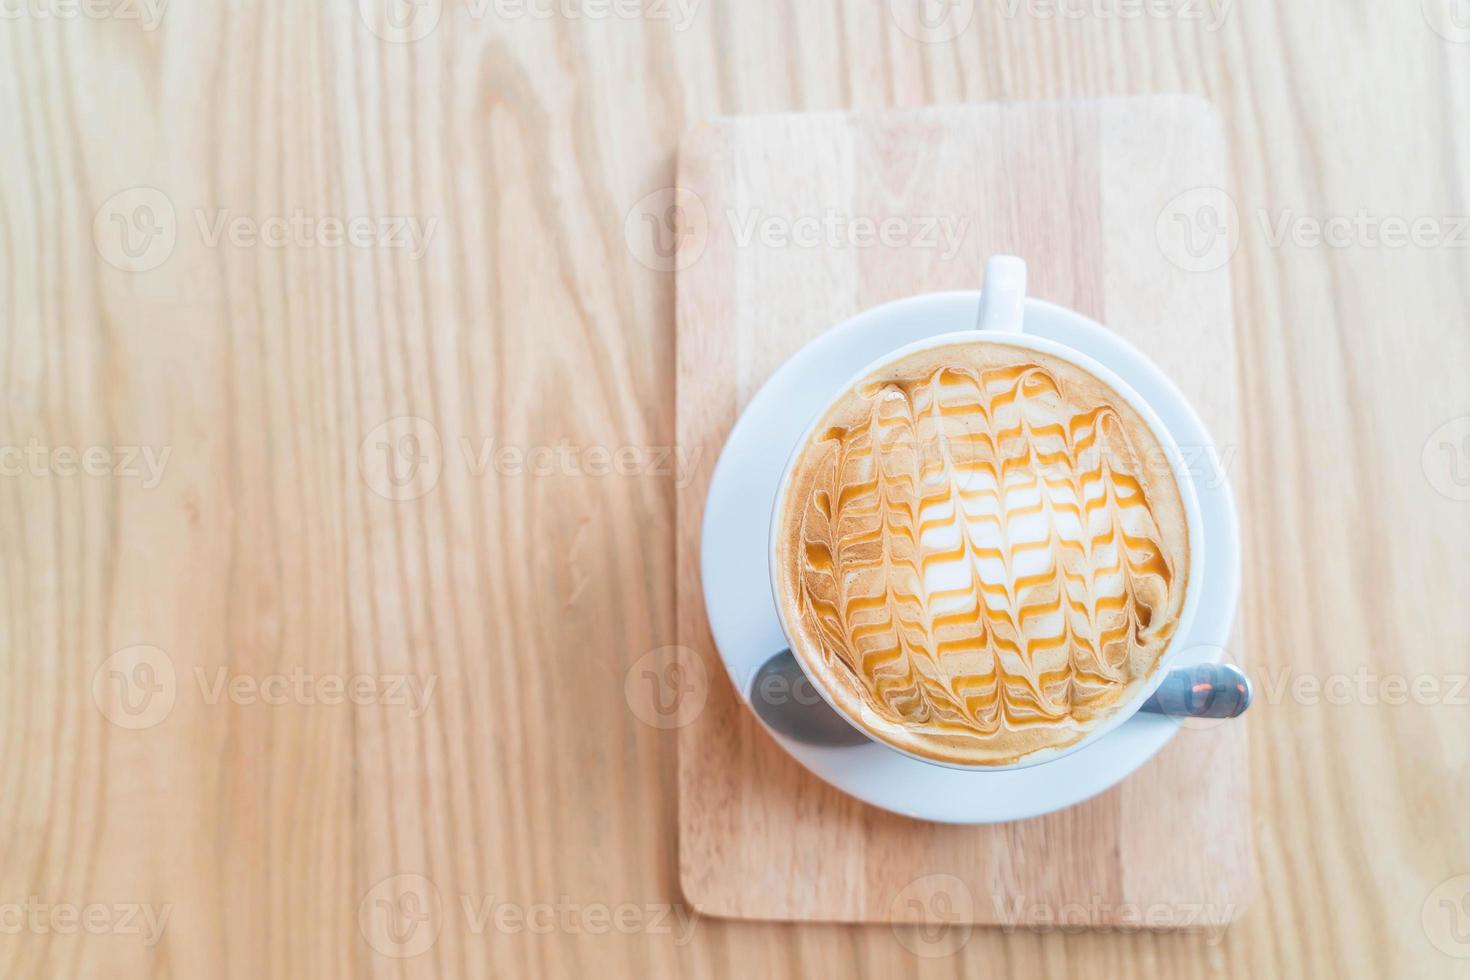 hete karamel macchiato in coffeeshop foto